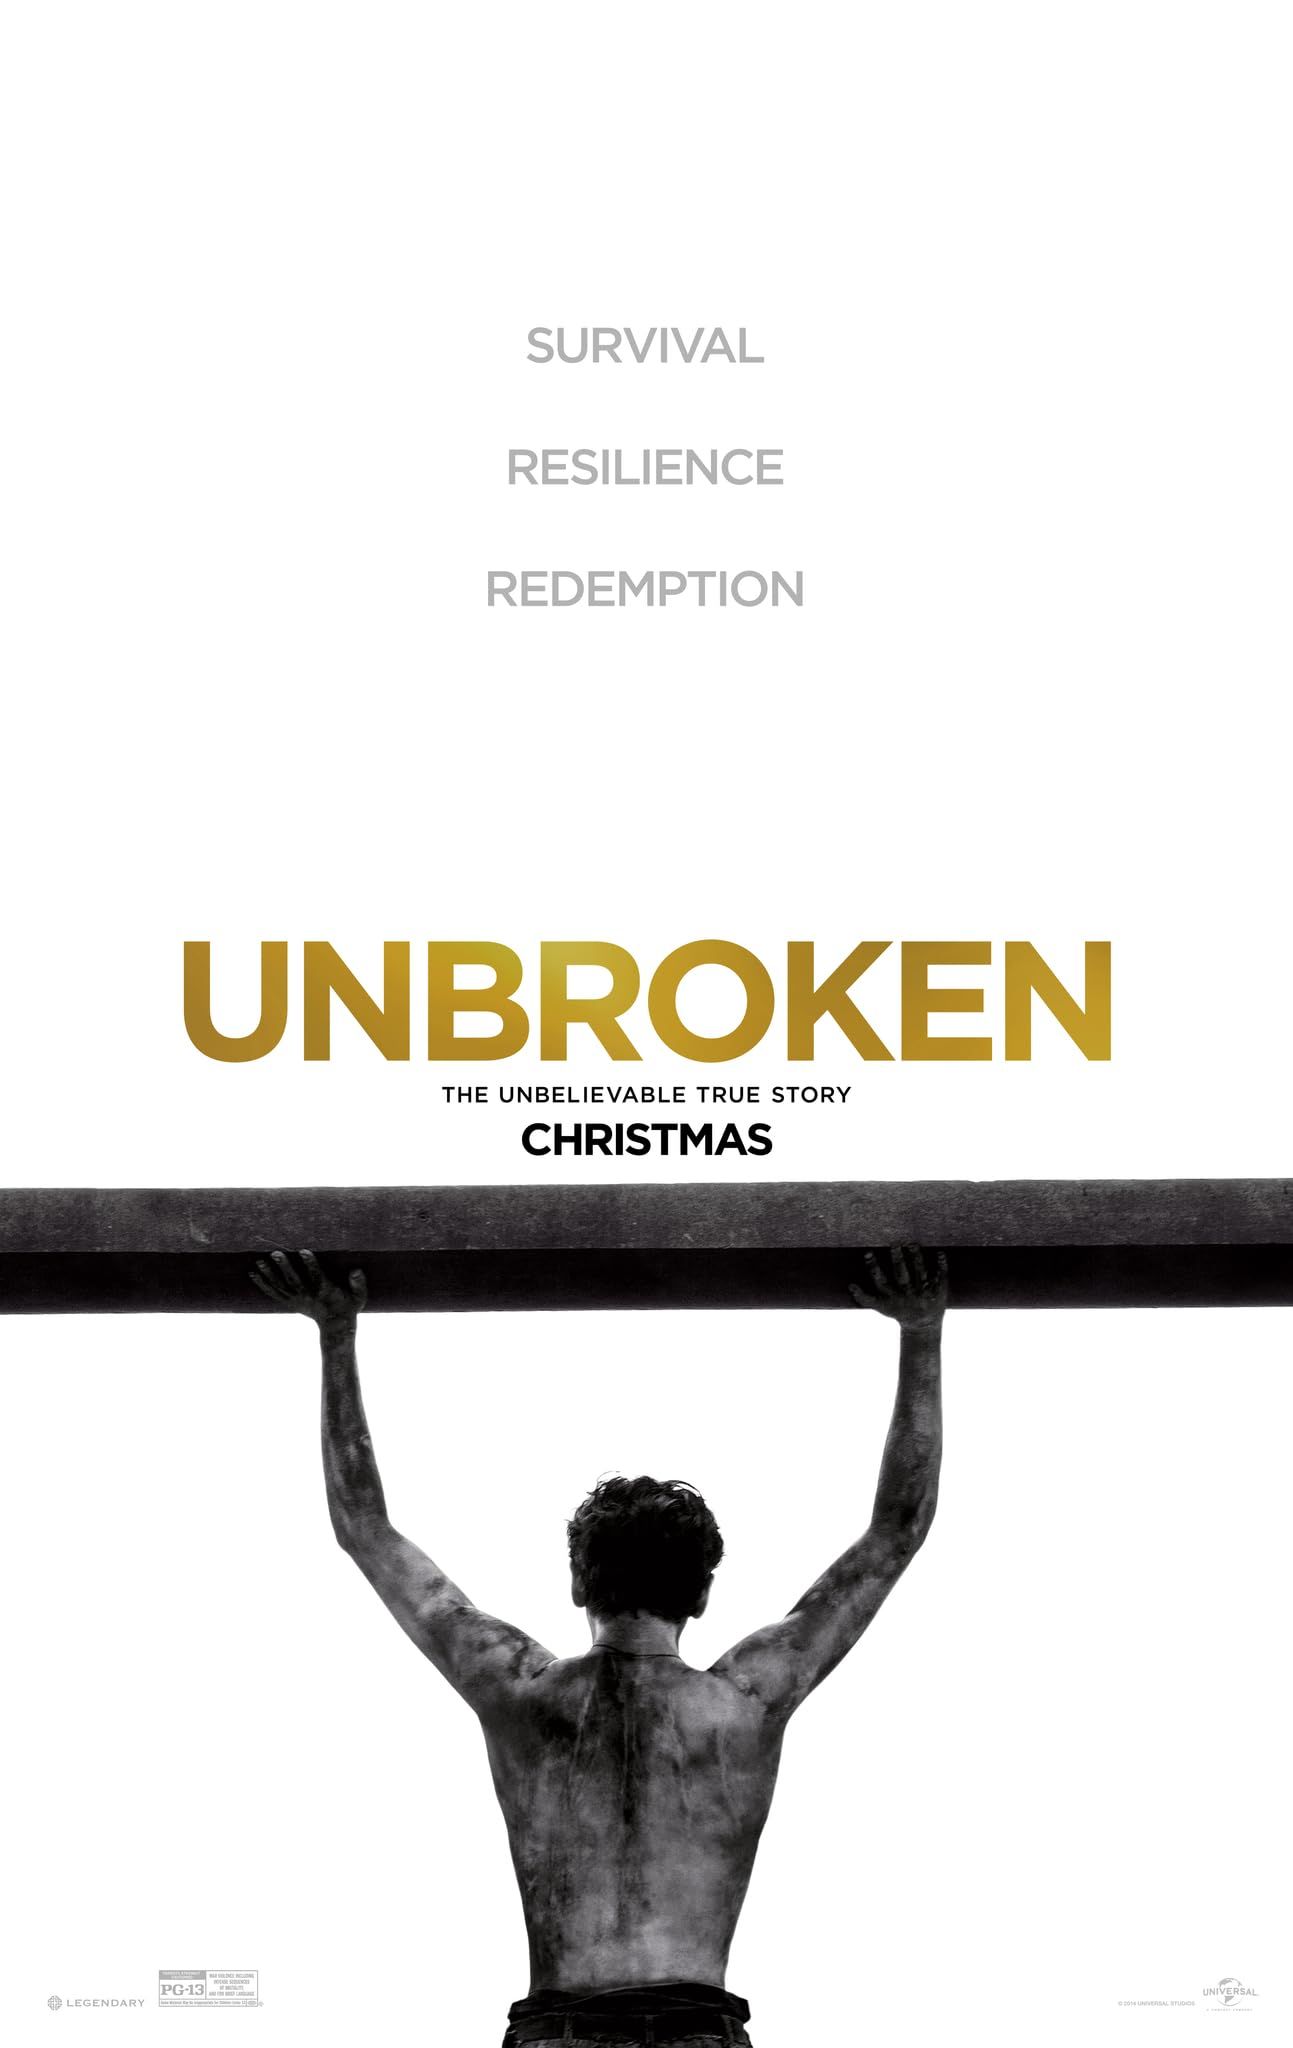 Unbroken (2014) Hindi Dubbed